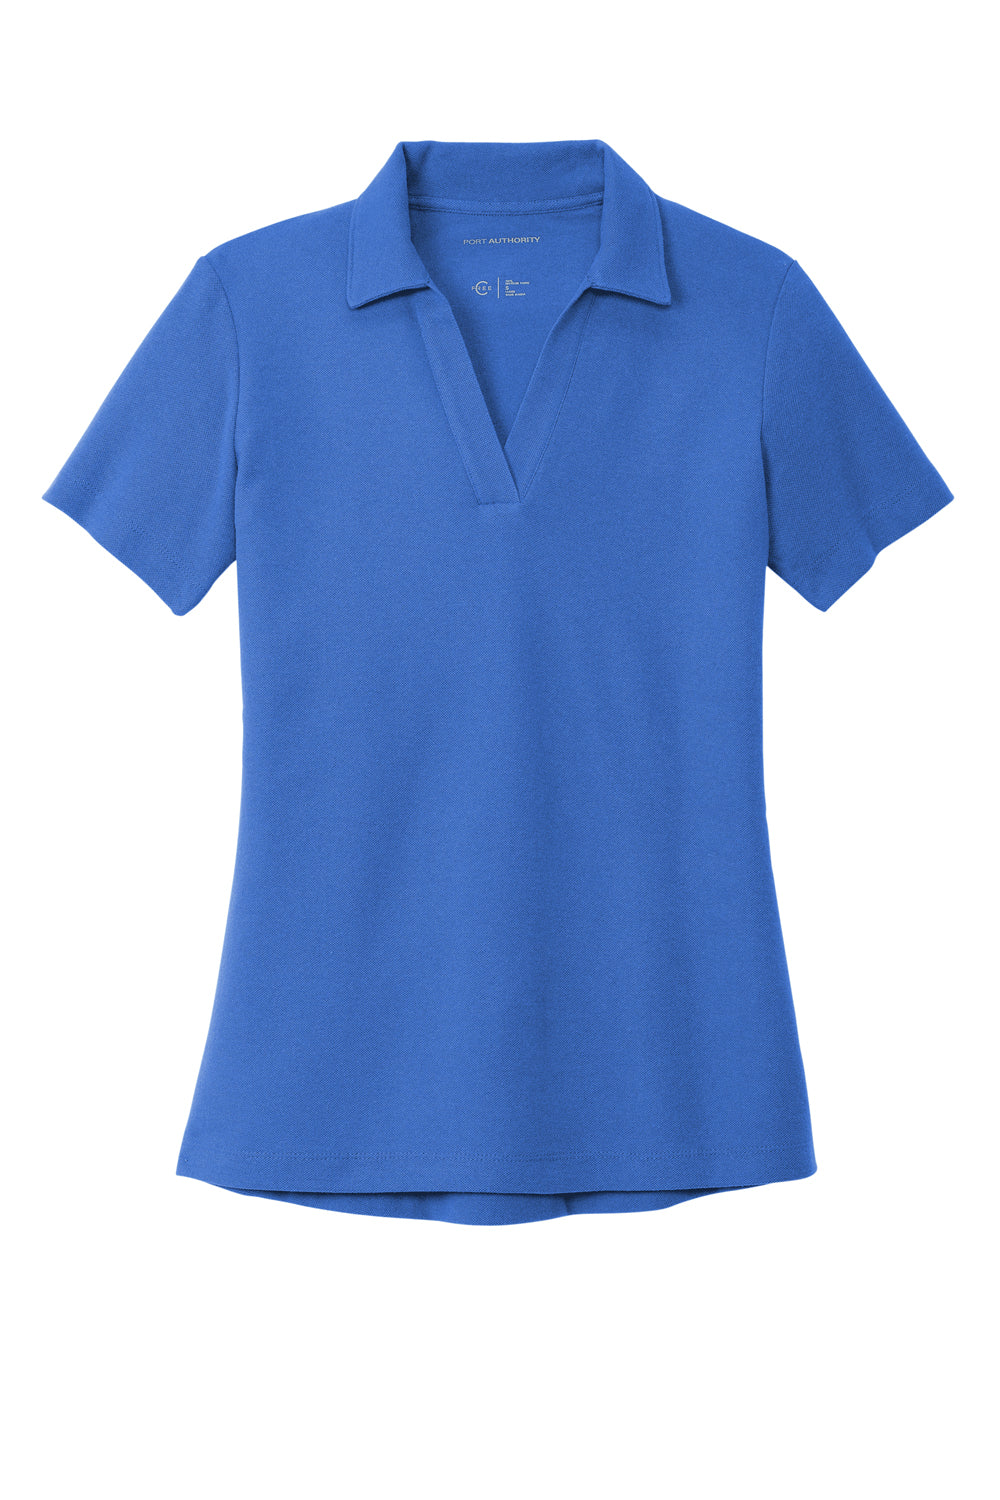 Port Authority LK867 Womens C-FREE Pique Short Sleeve Polo Shirt True Blue Flat Front